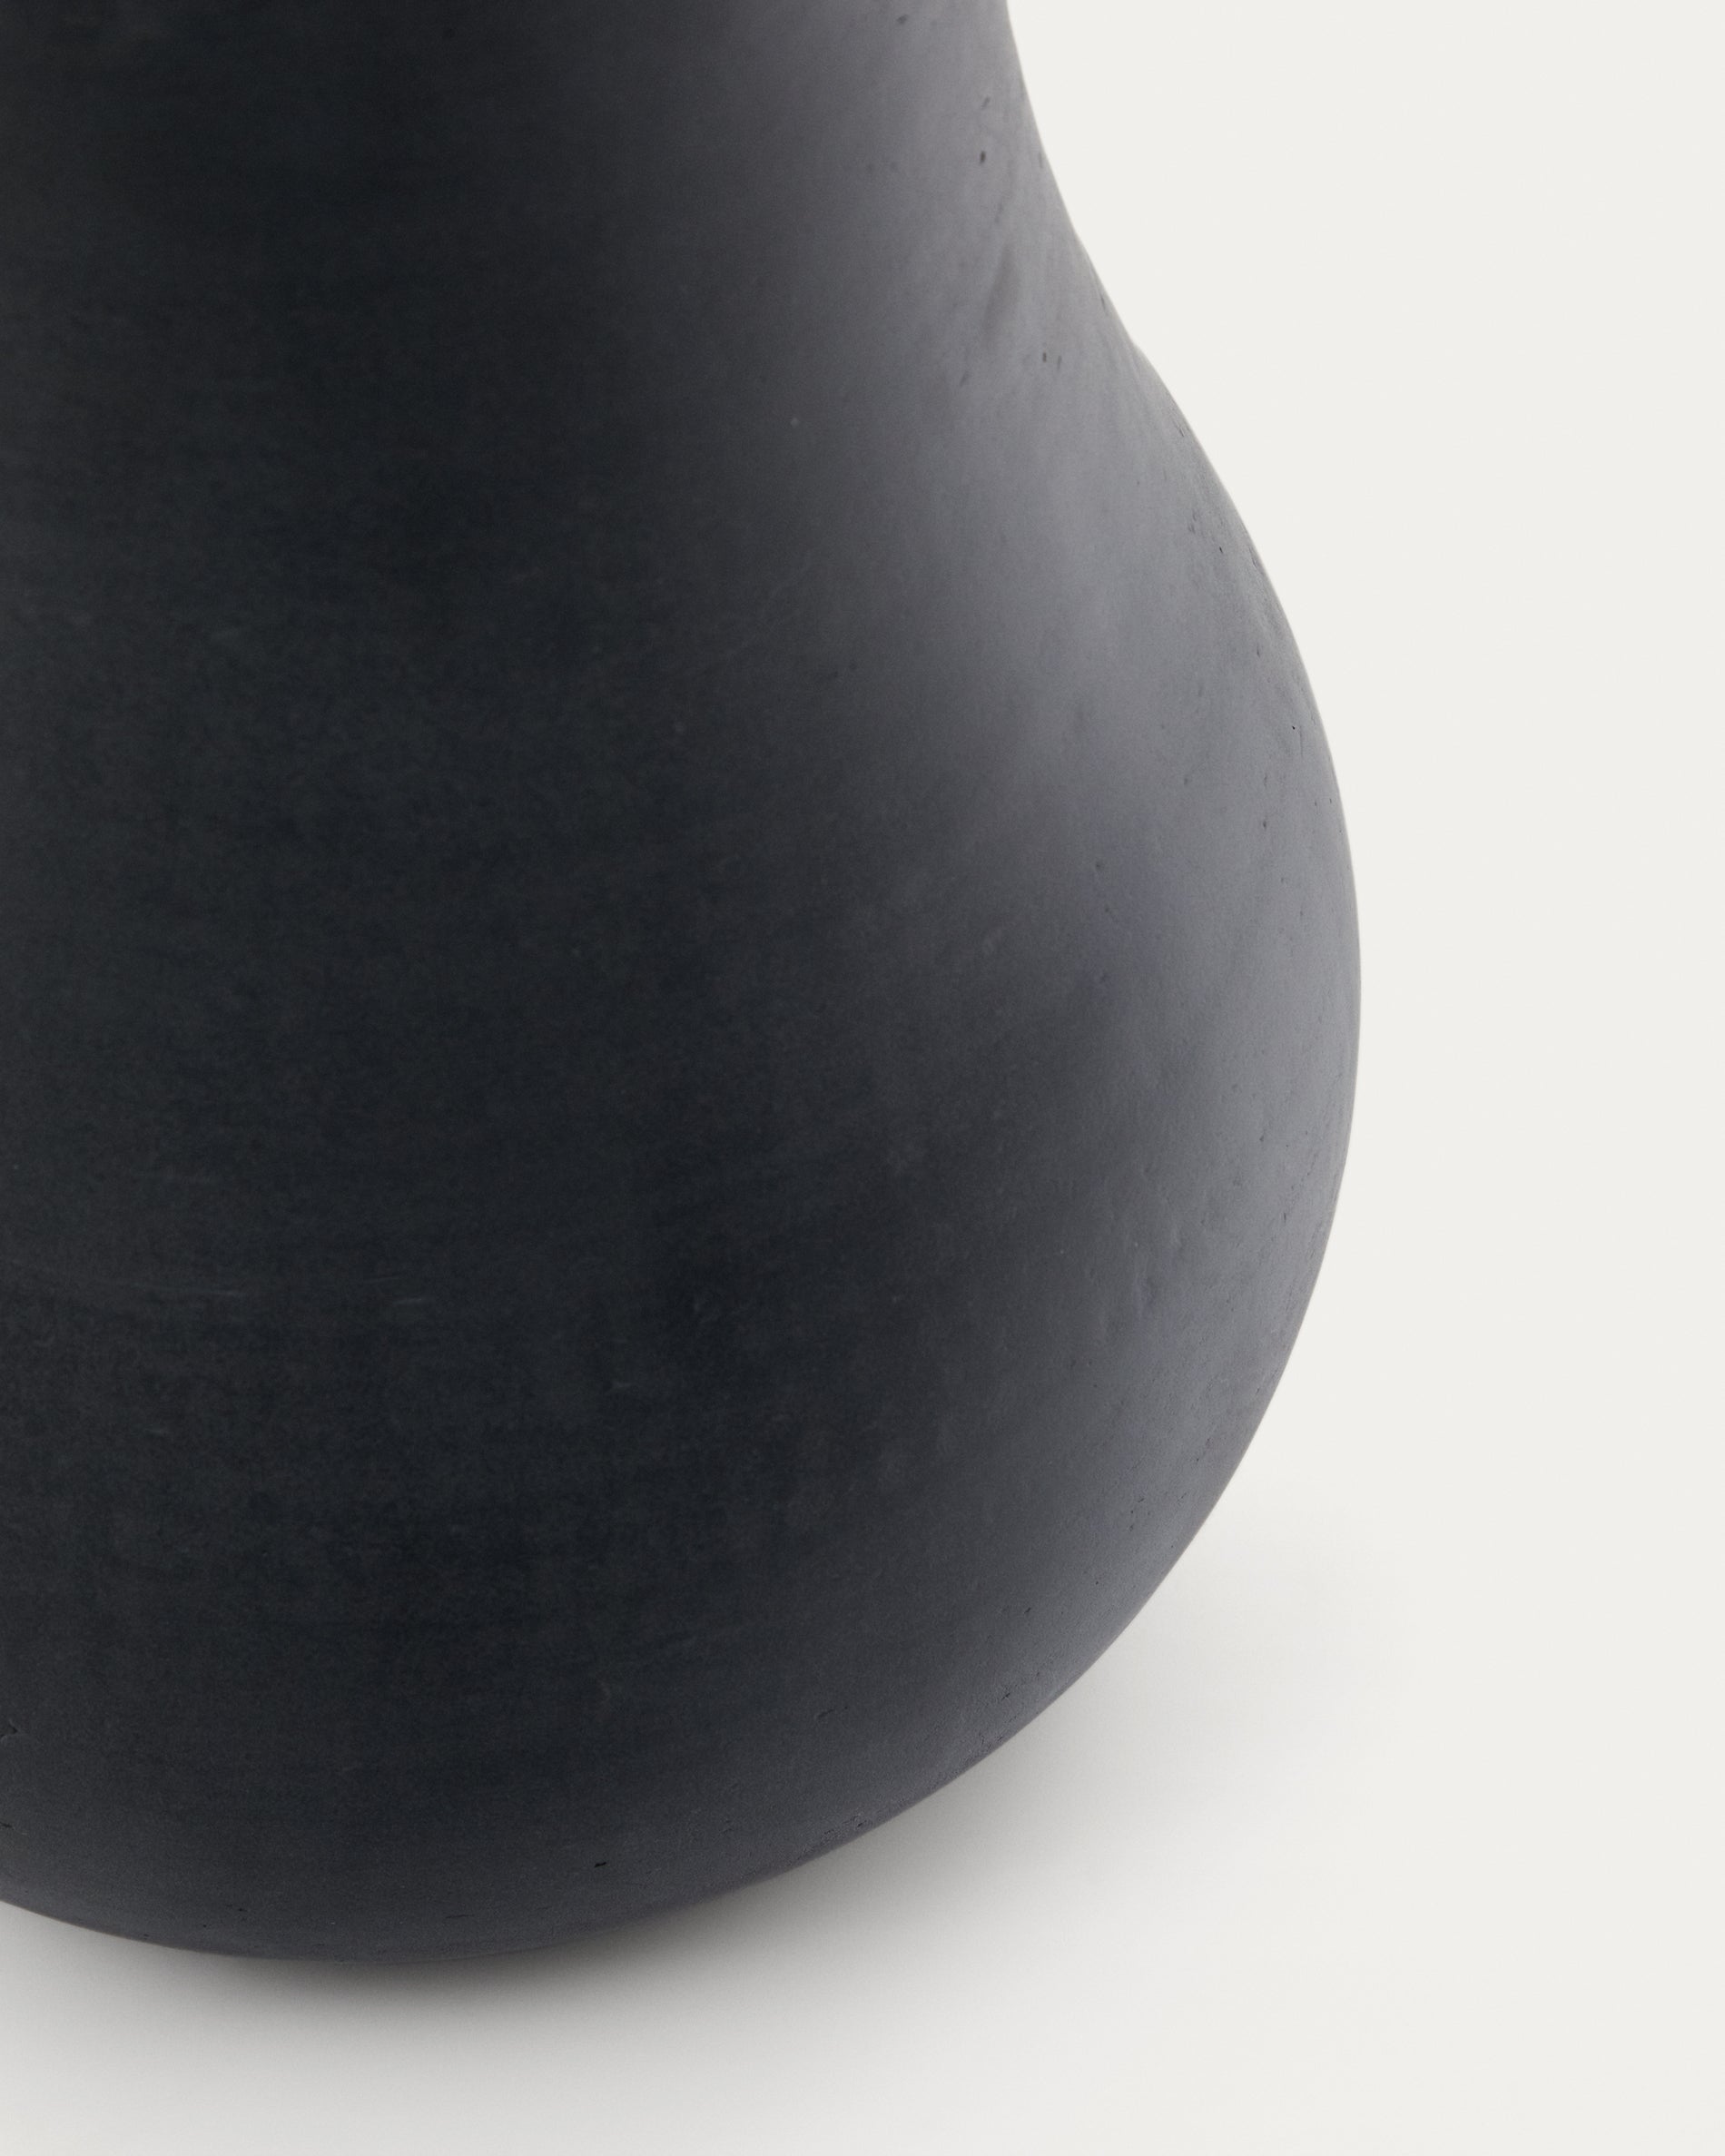 Silaia terracotta vase with black finish 30 cm